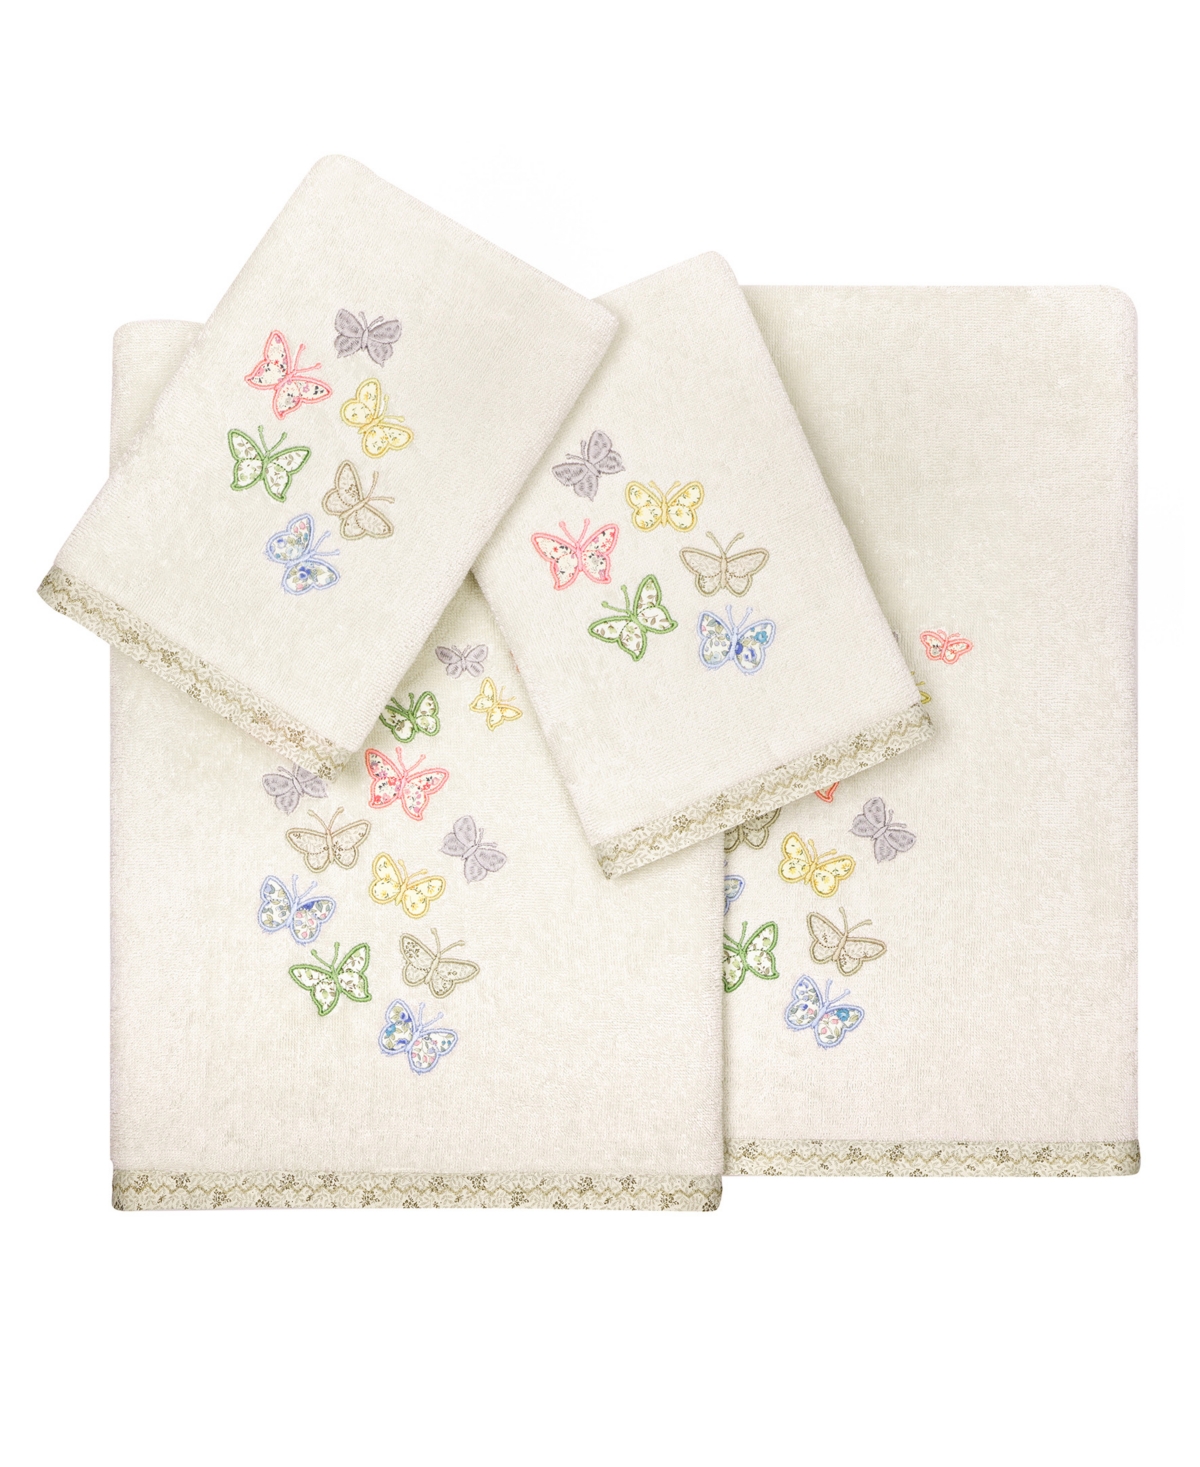 Linum Home Textiles Turkish Cotton Mariposa Embellished Towel Set, 4 Piece Bedding In Beige